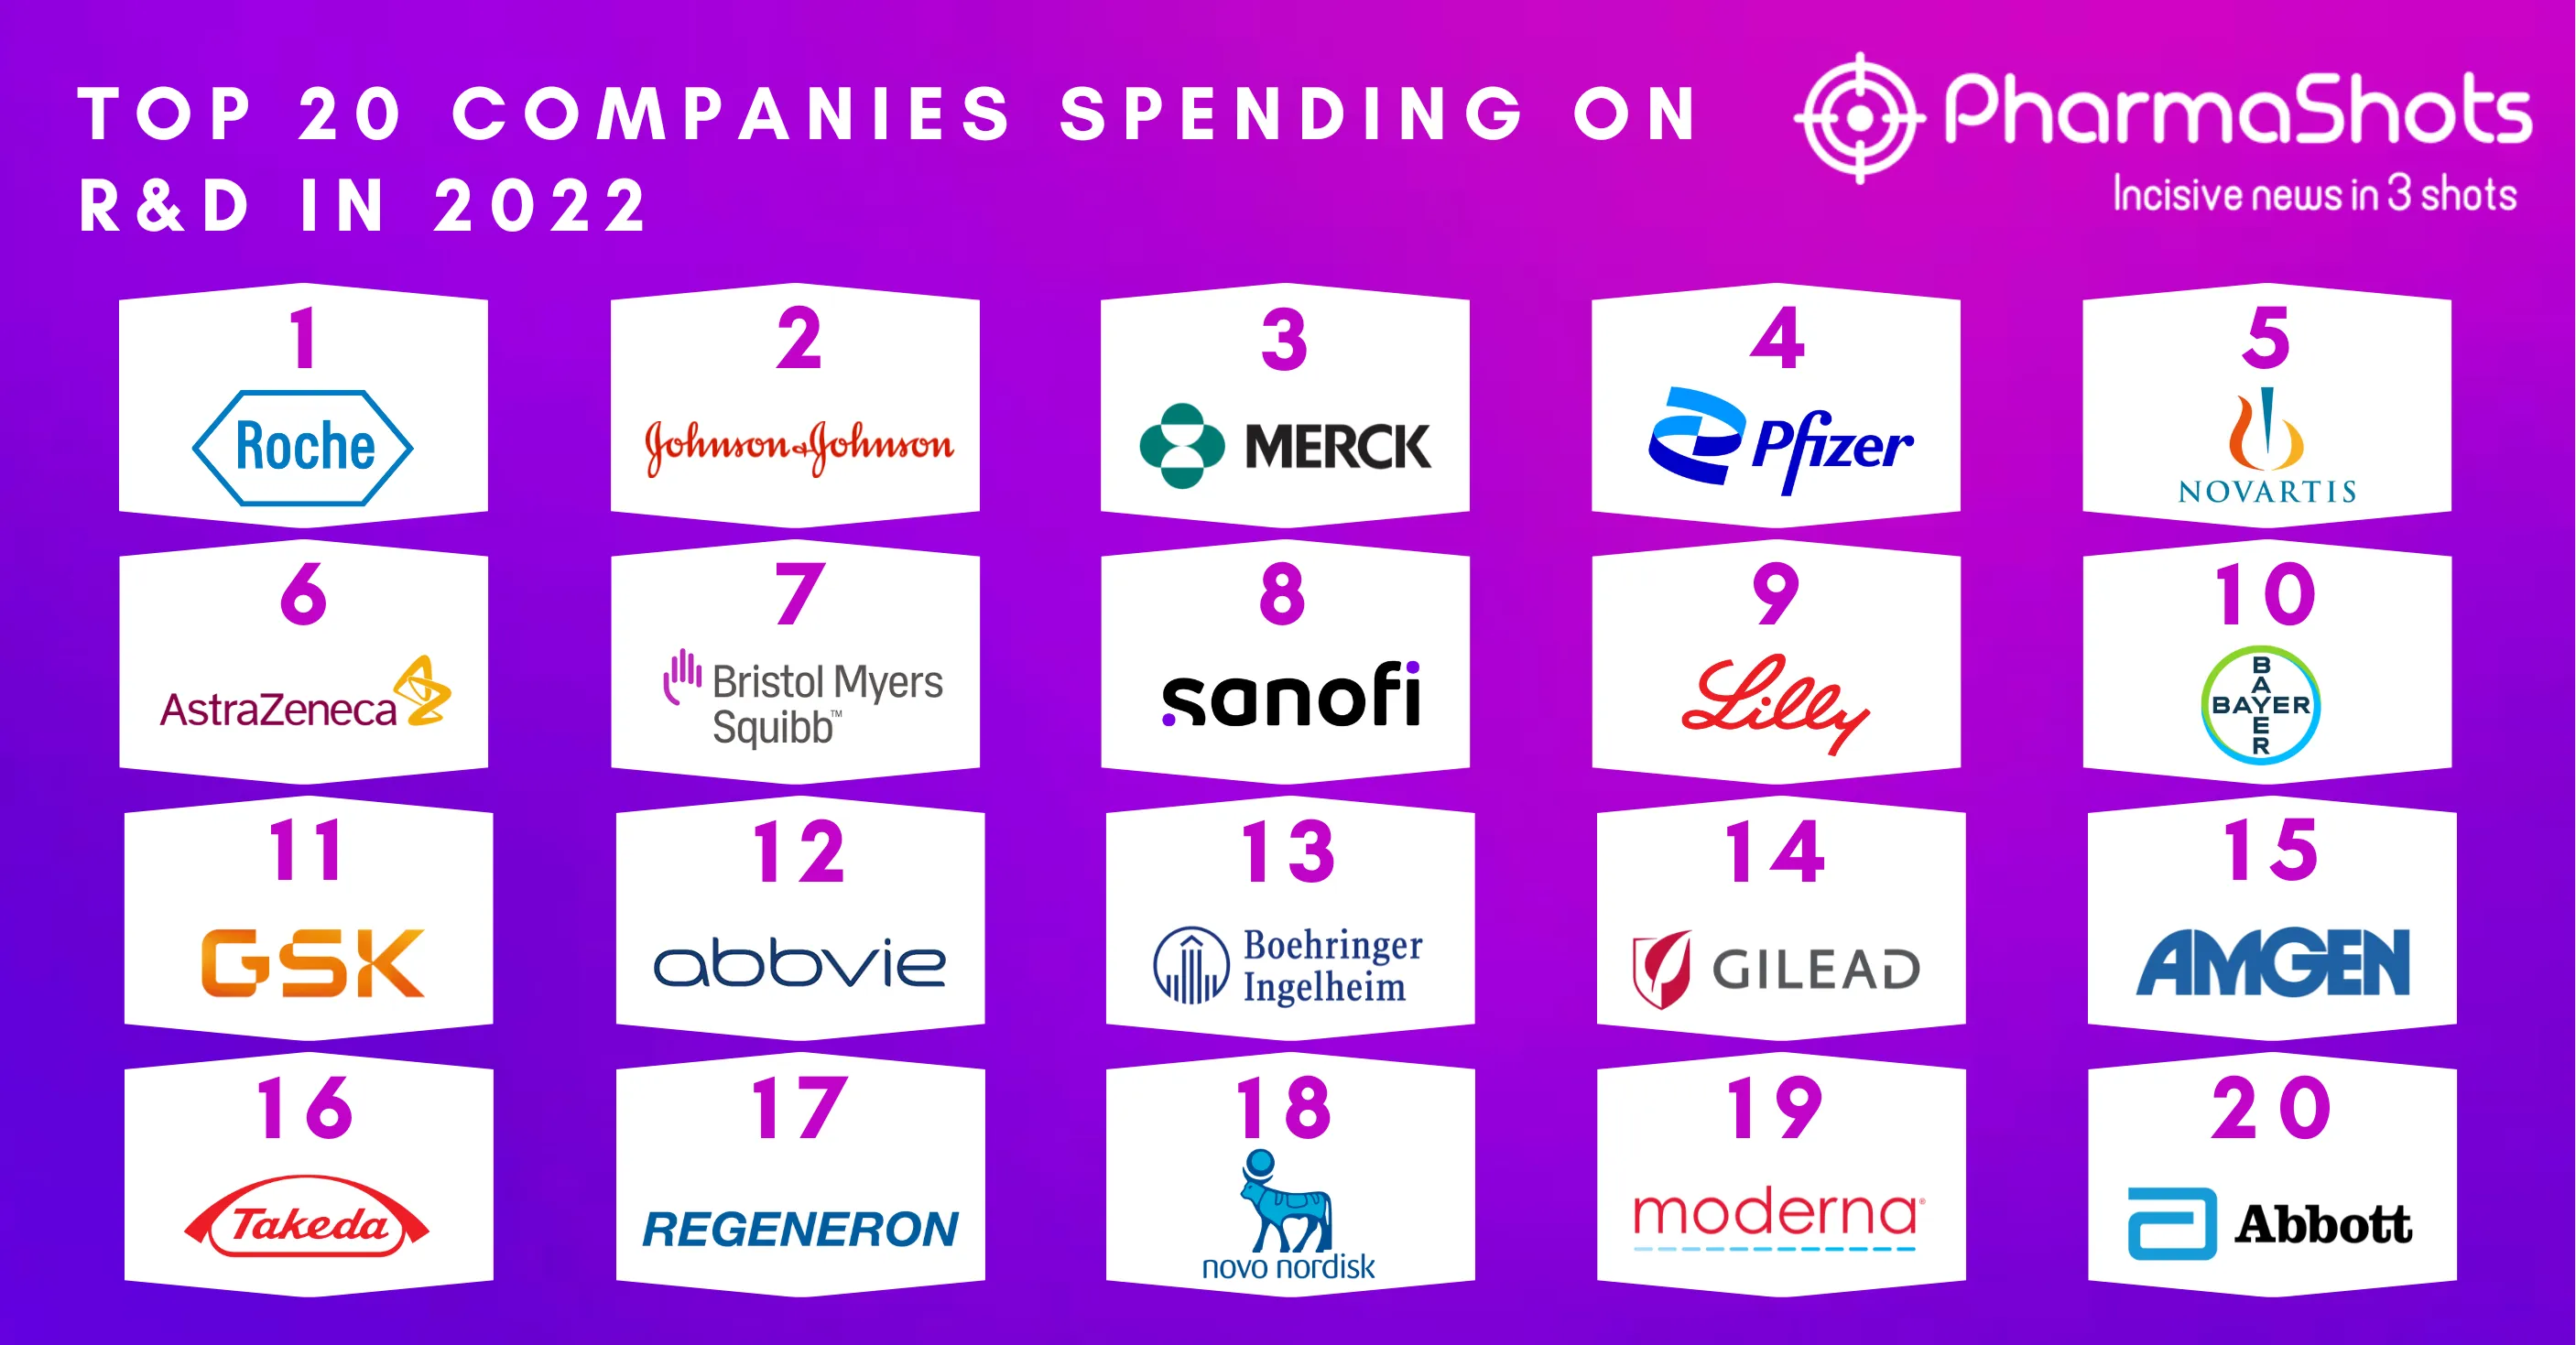 Top 20 Companies Spending on R&D in 2022